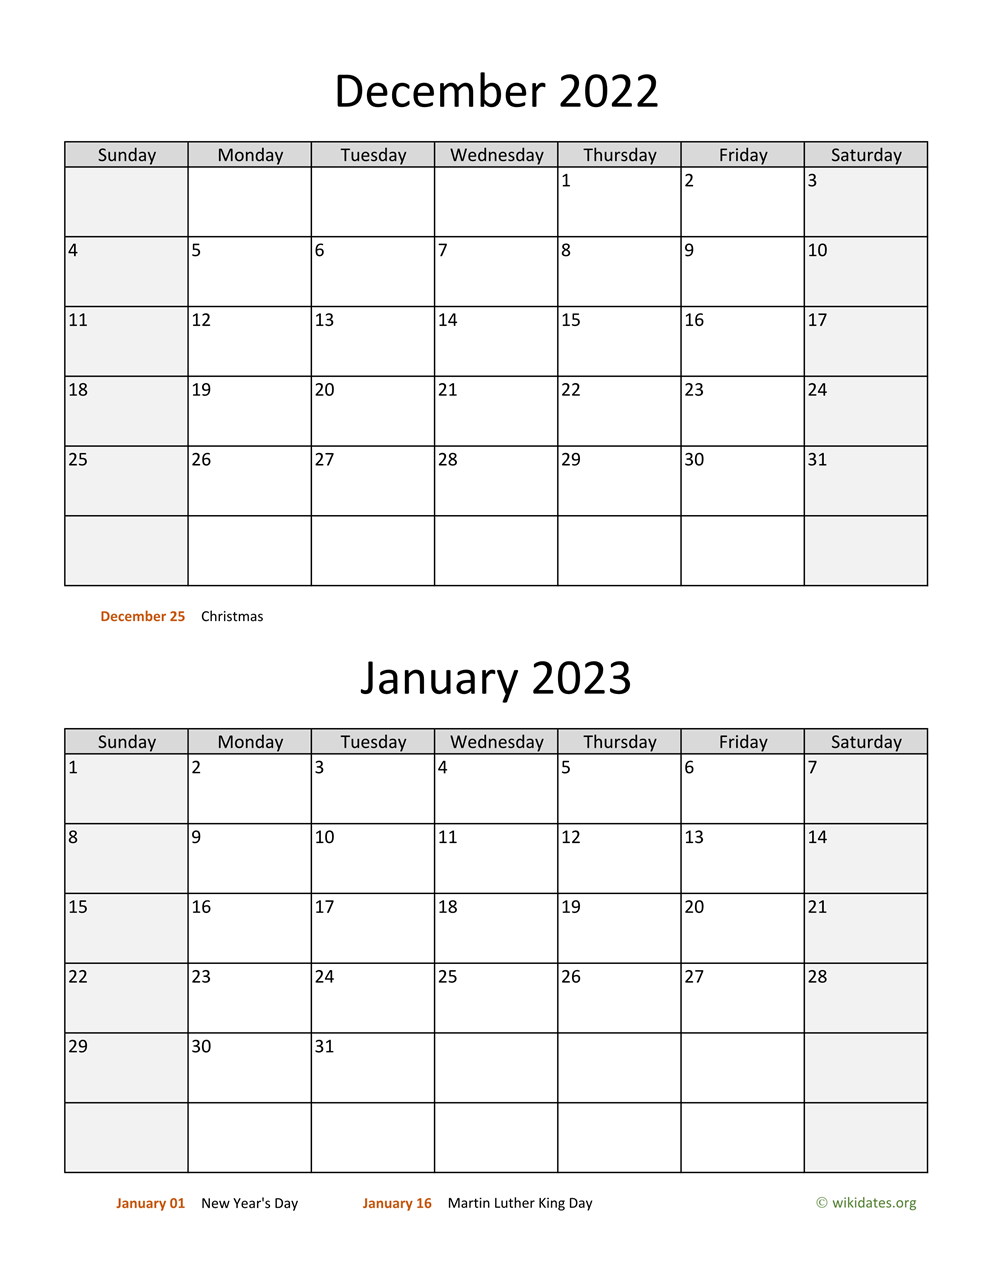 December 2022 and January 2023 Calendar